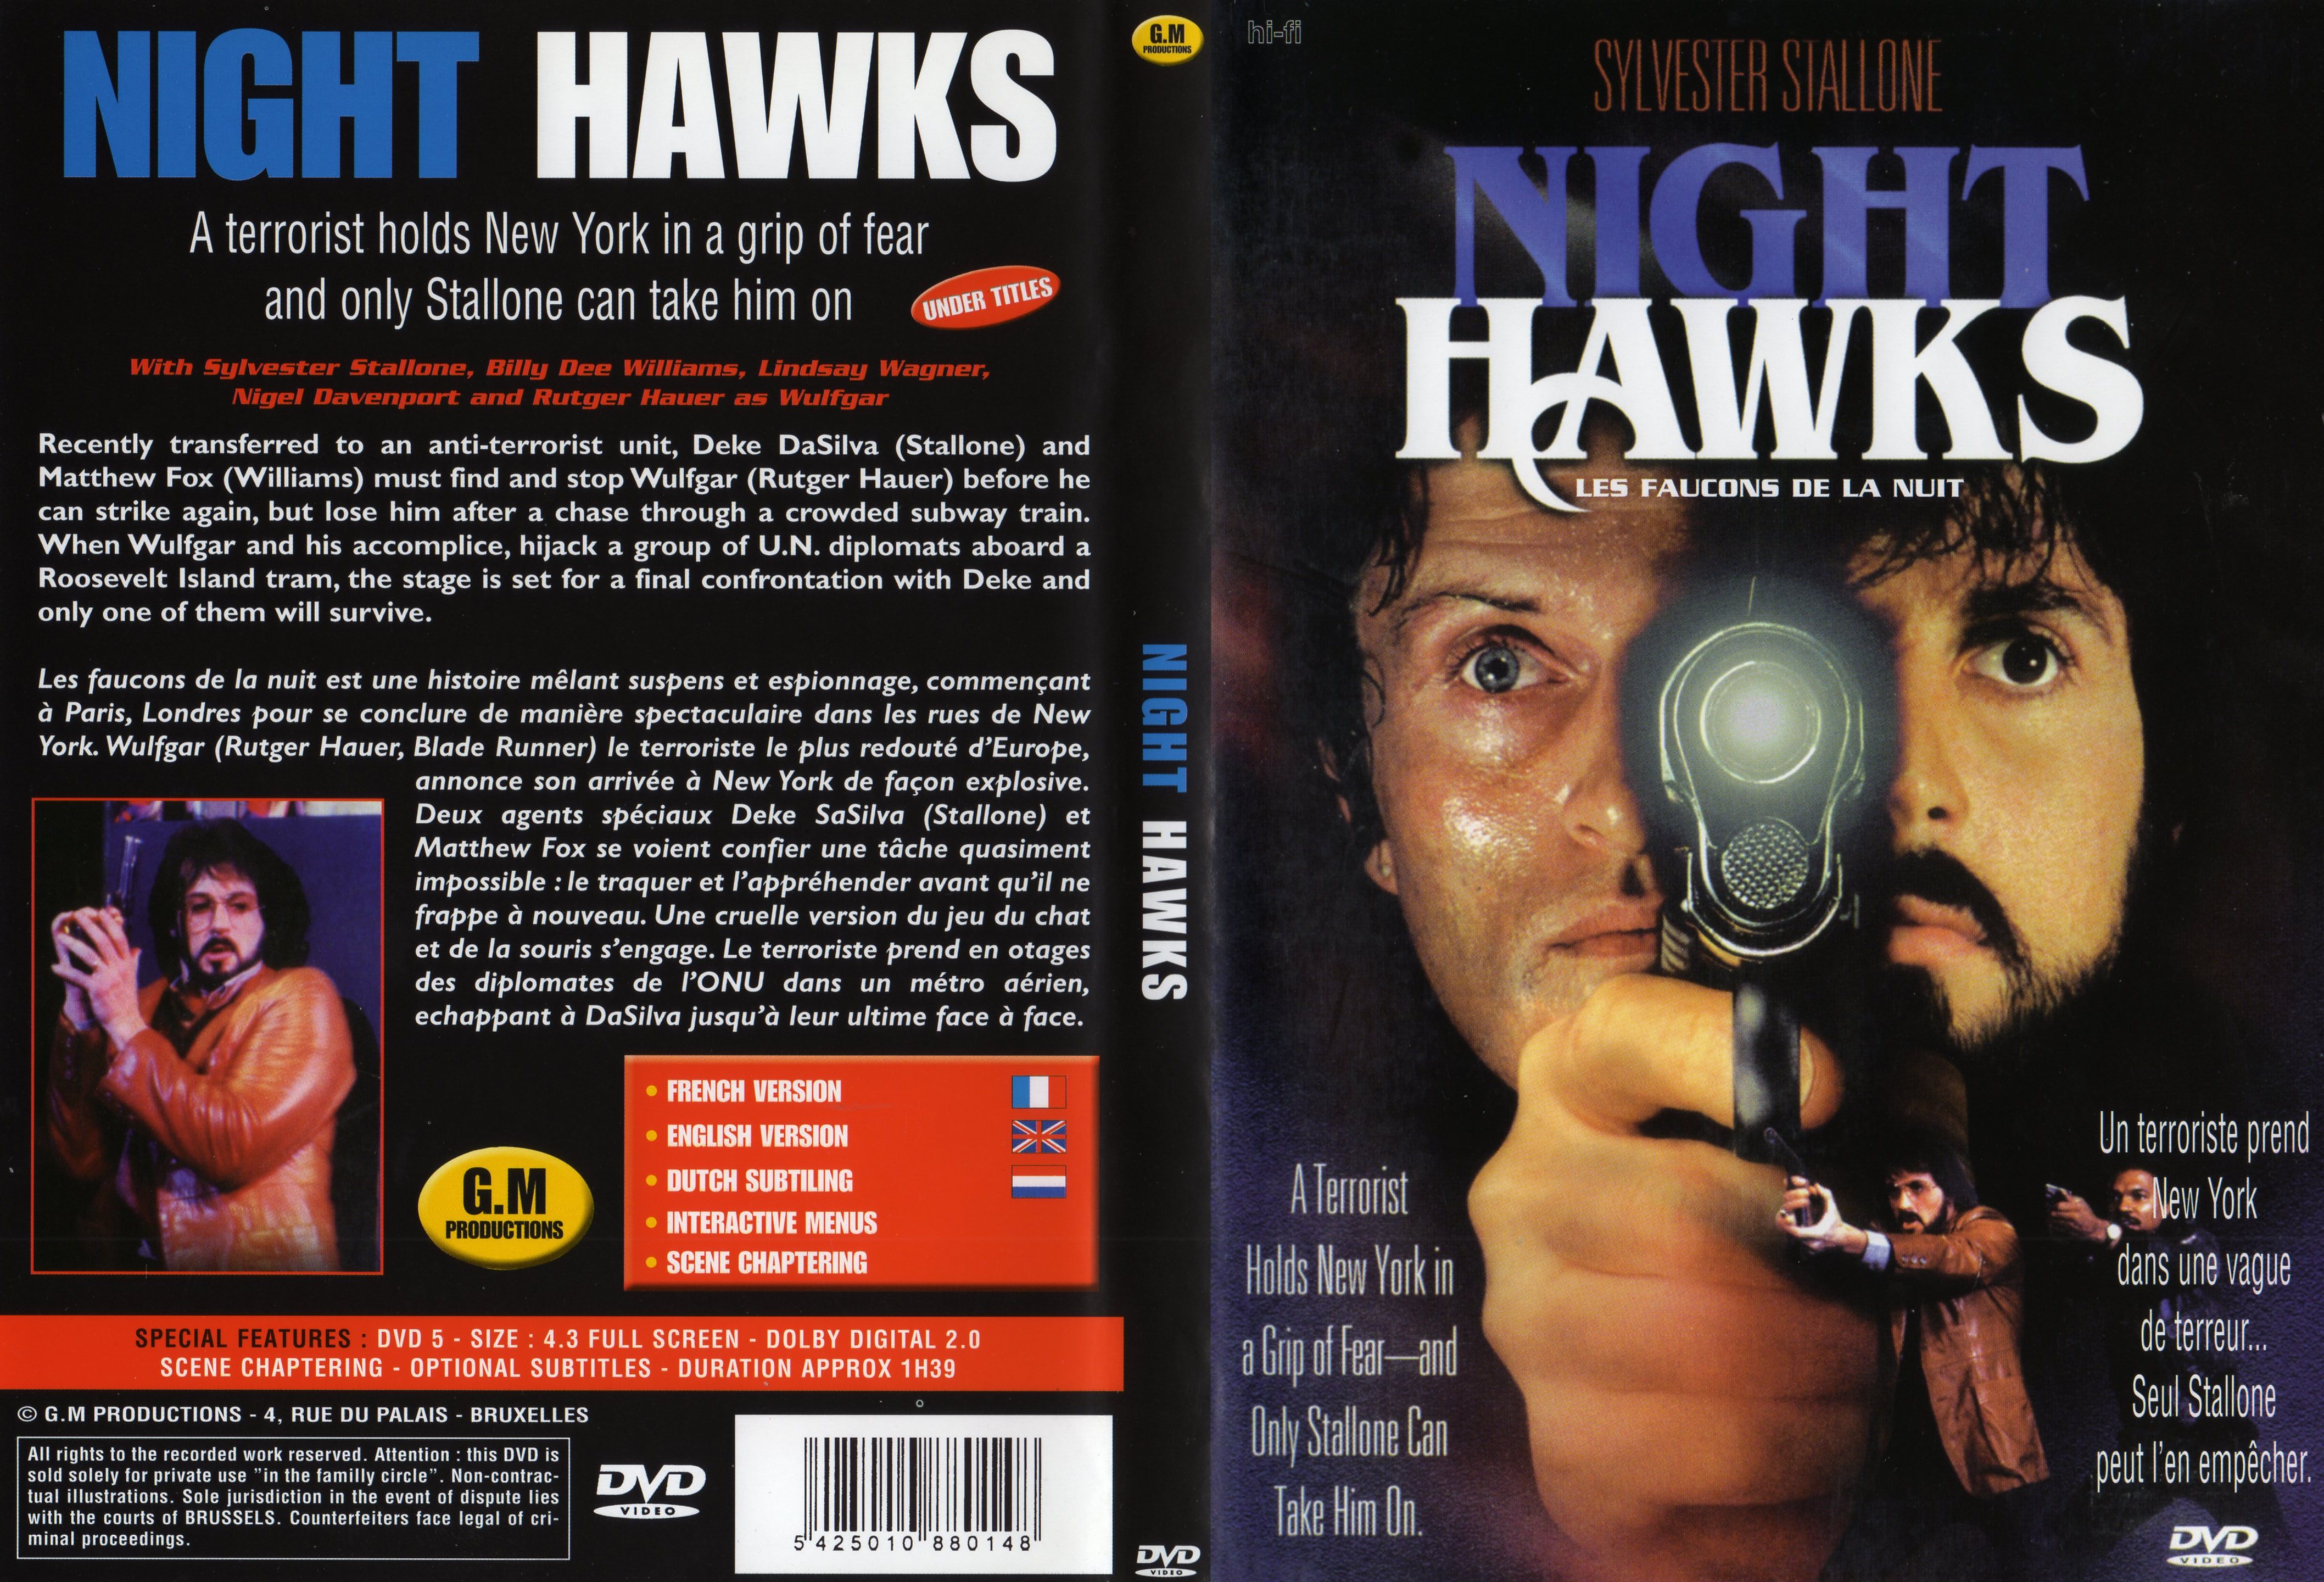 Jaquette DVD Night hawks